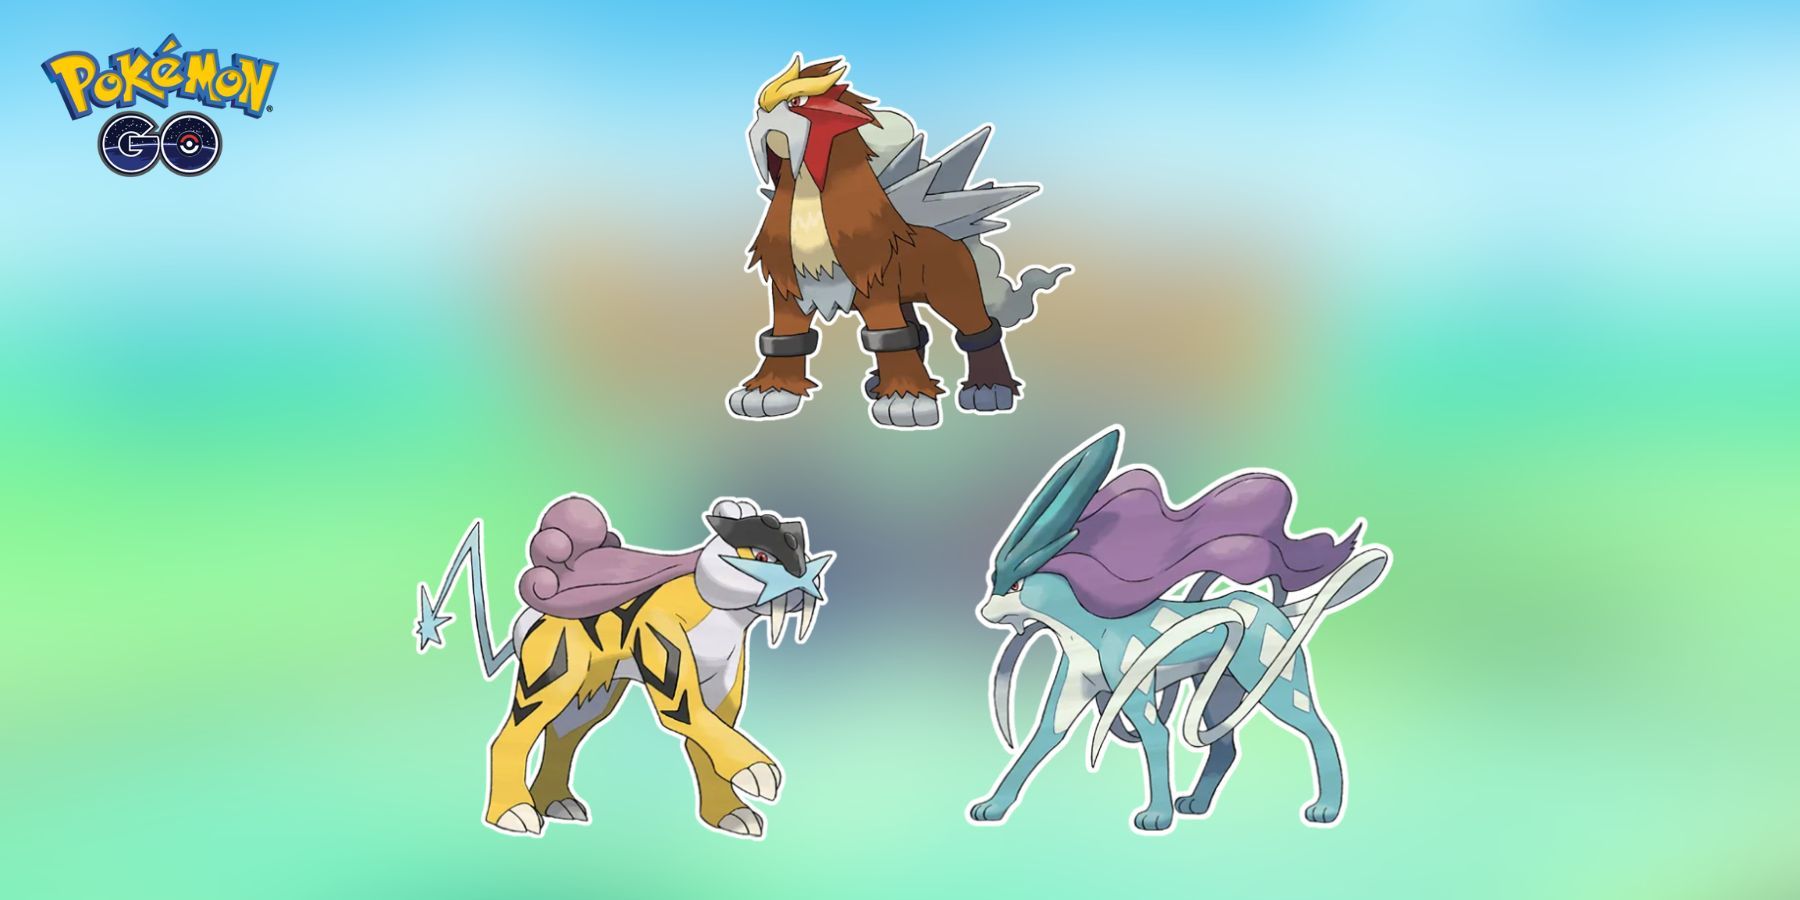 Lendários Raikou, Entei e Suicune chegam a Pokémon GO